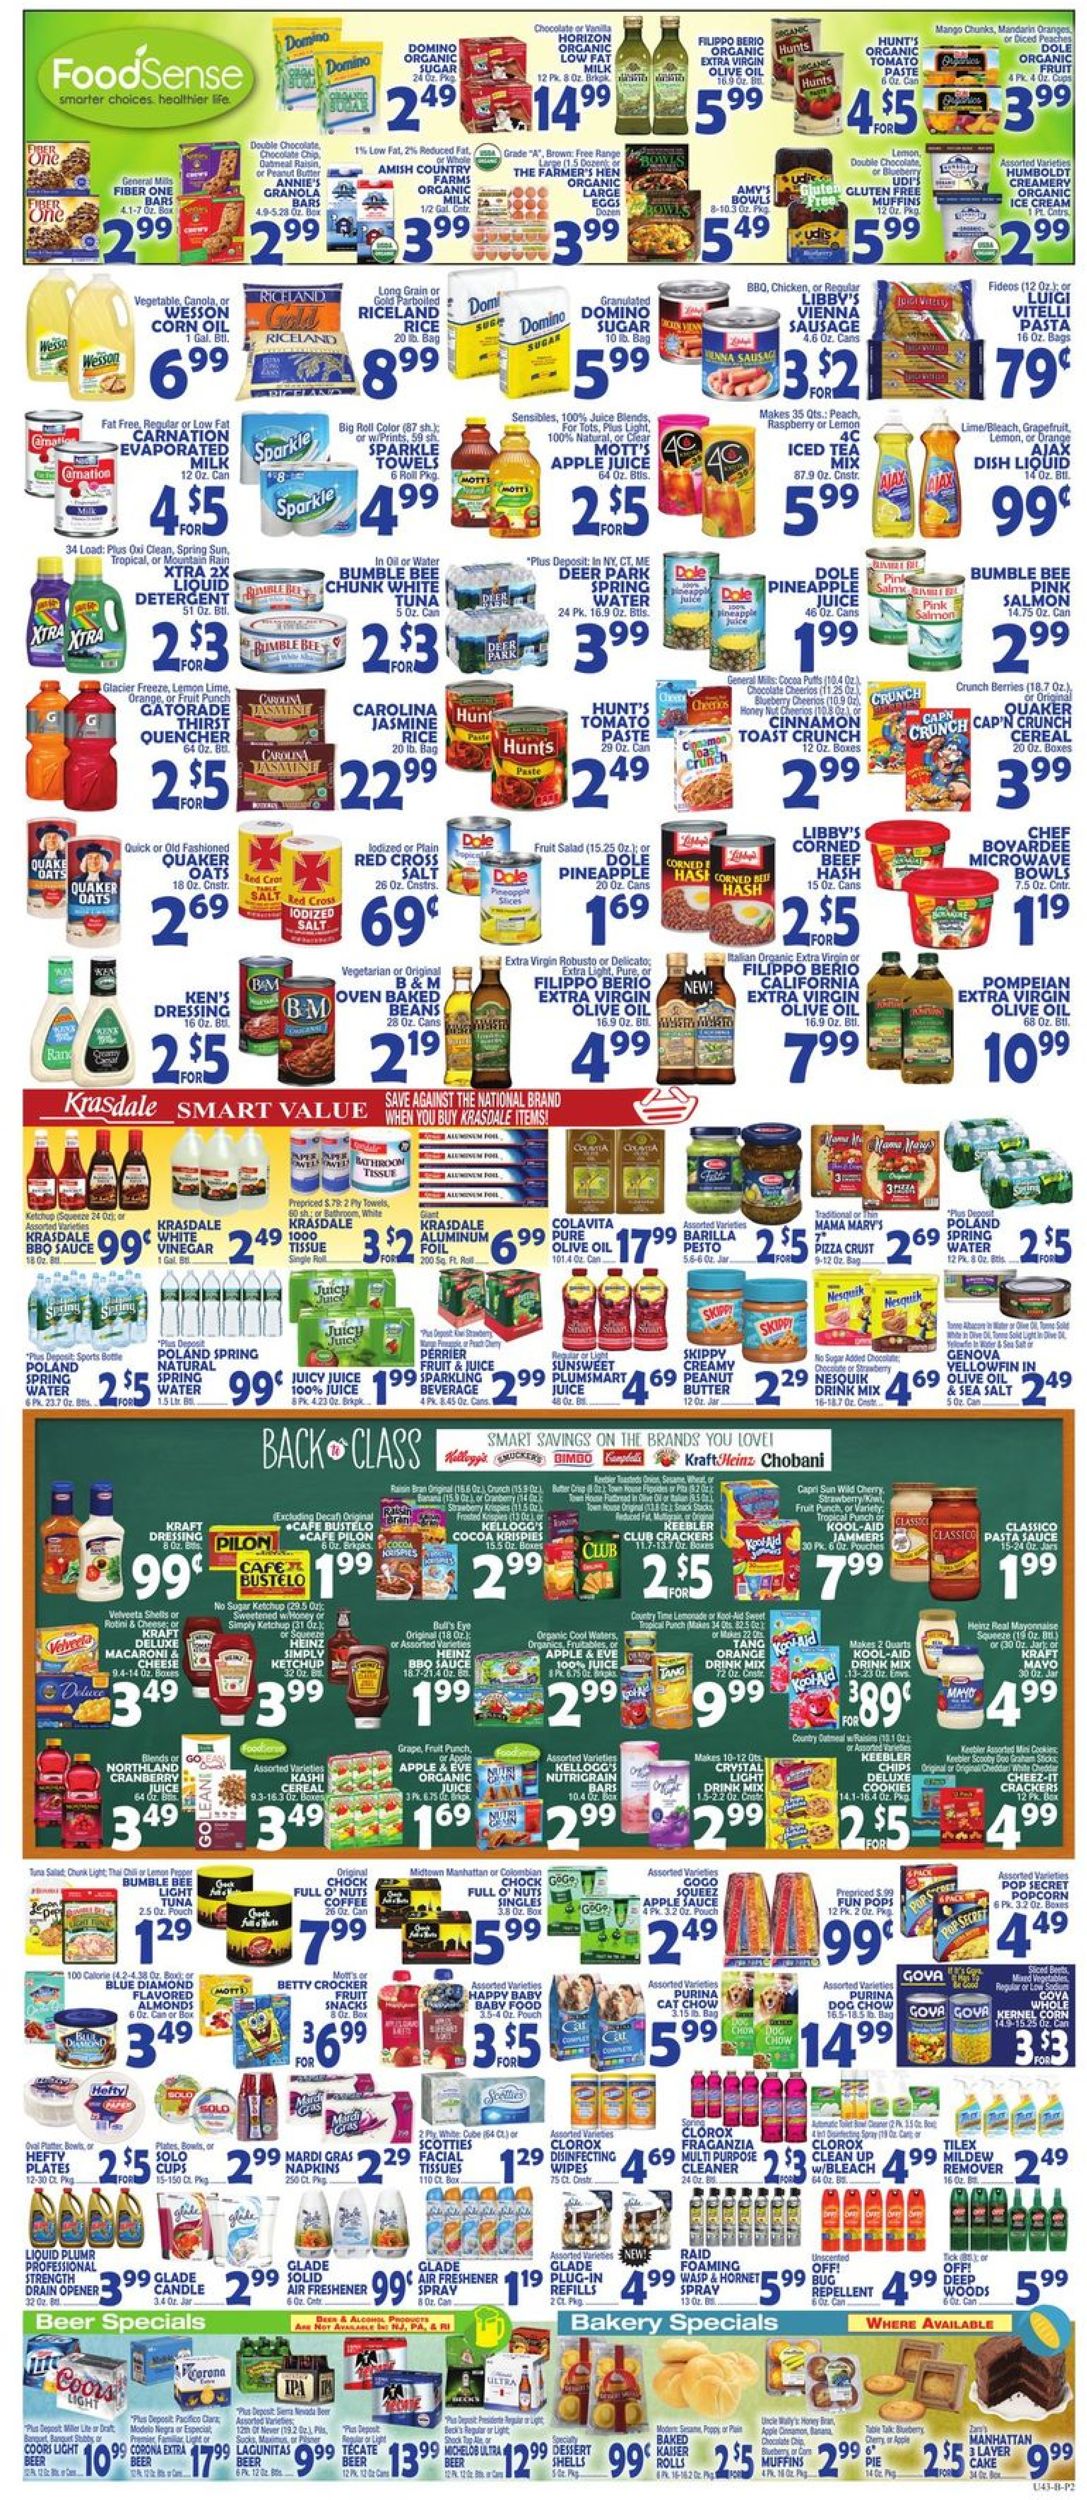 Catalogue Bravo Supermarkets from 08/16/2019